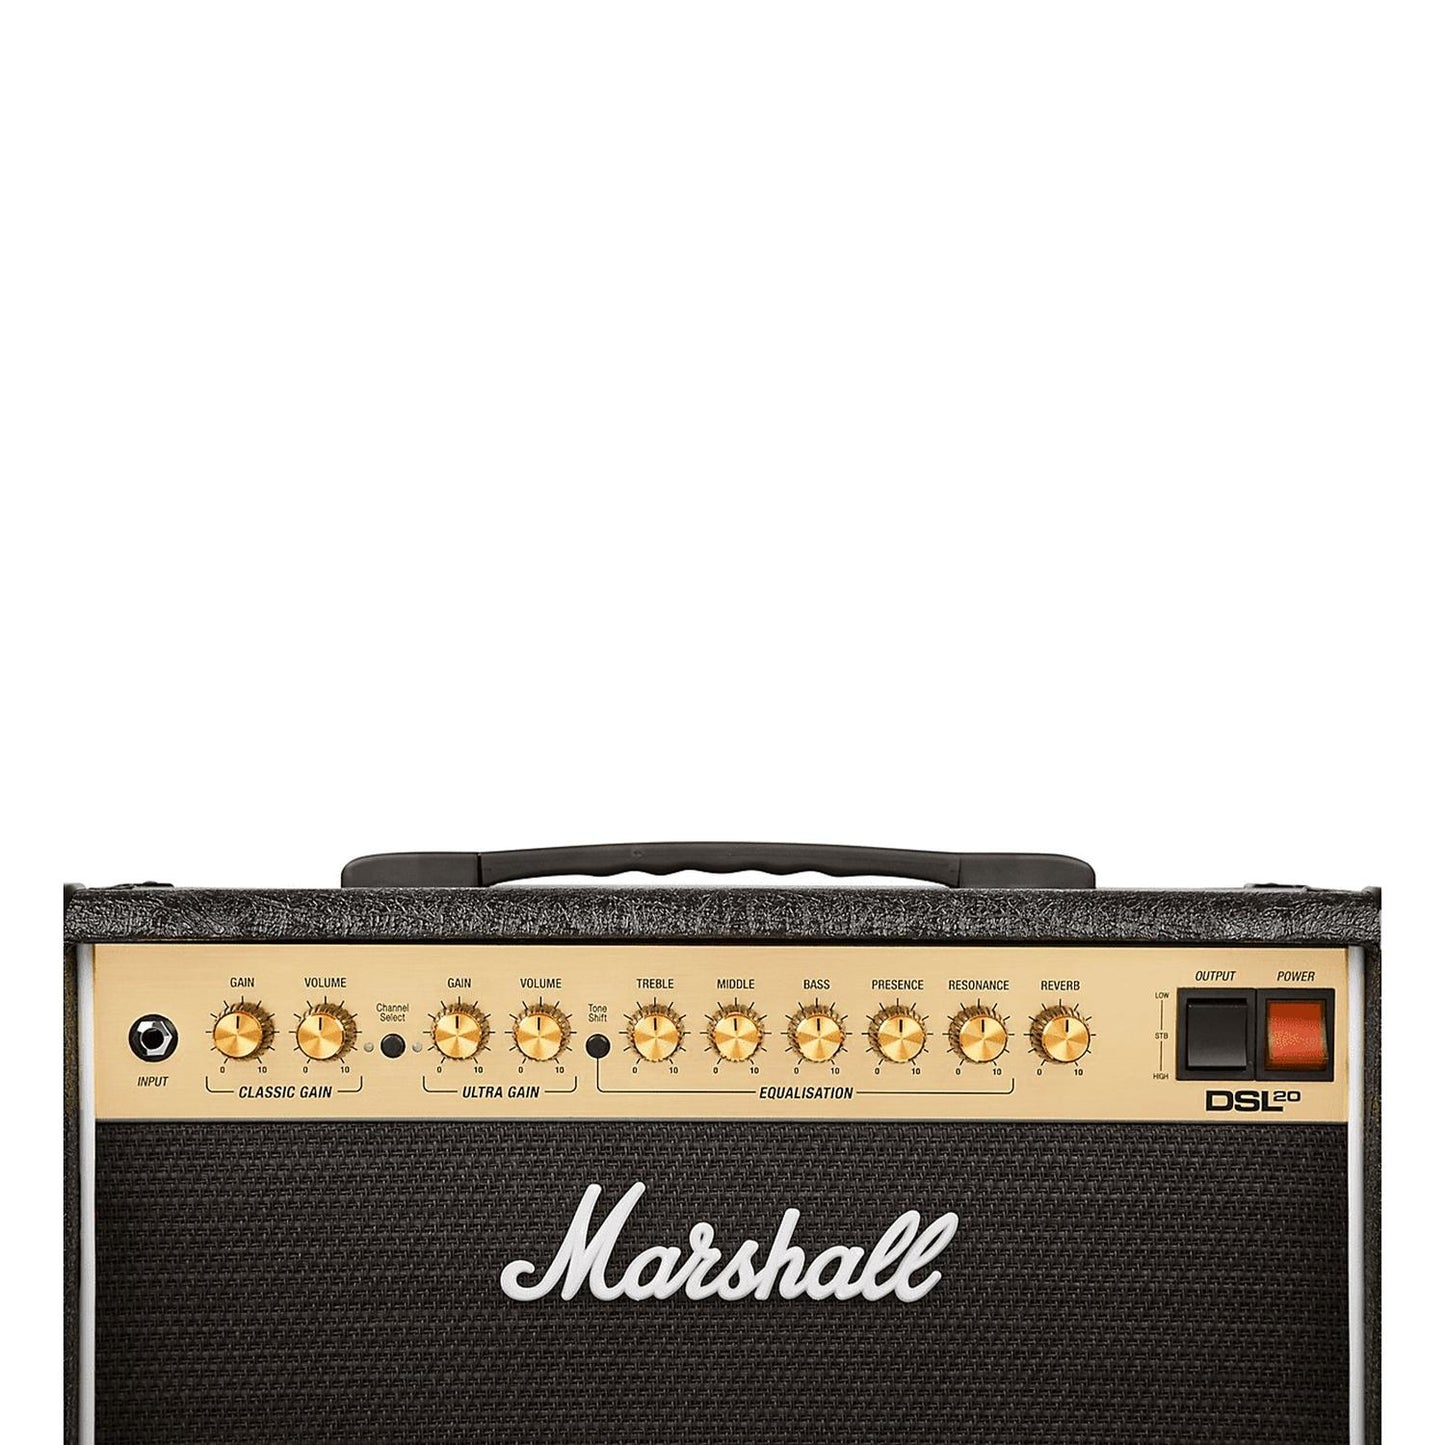 Amplificador de Guitarra DSL20CR MARSHALL